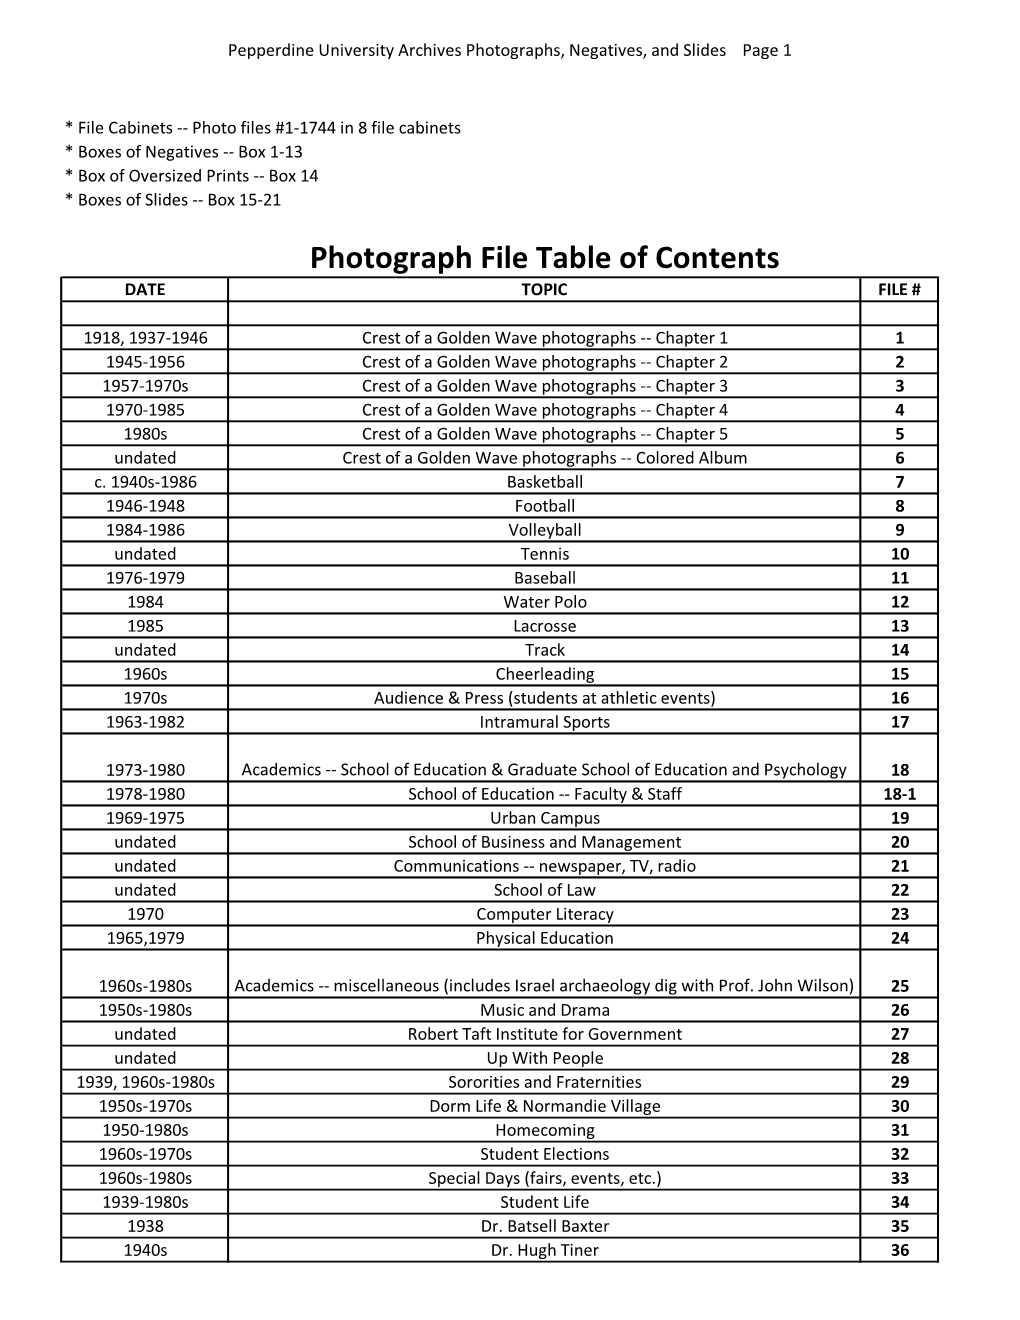 File List -- Pepperdine University Archives Photographs, Negatives